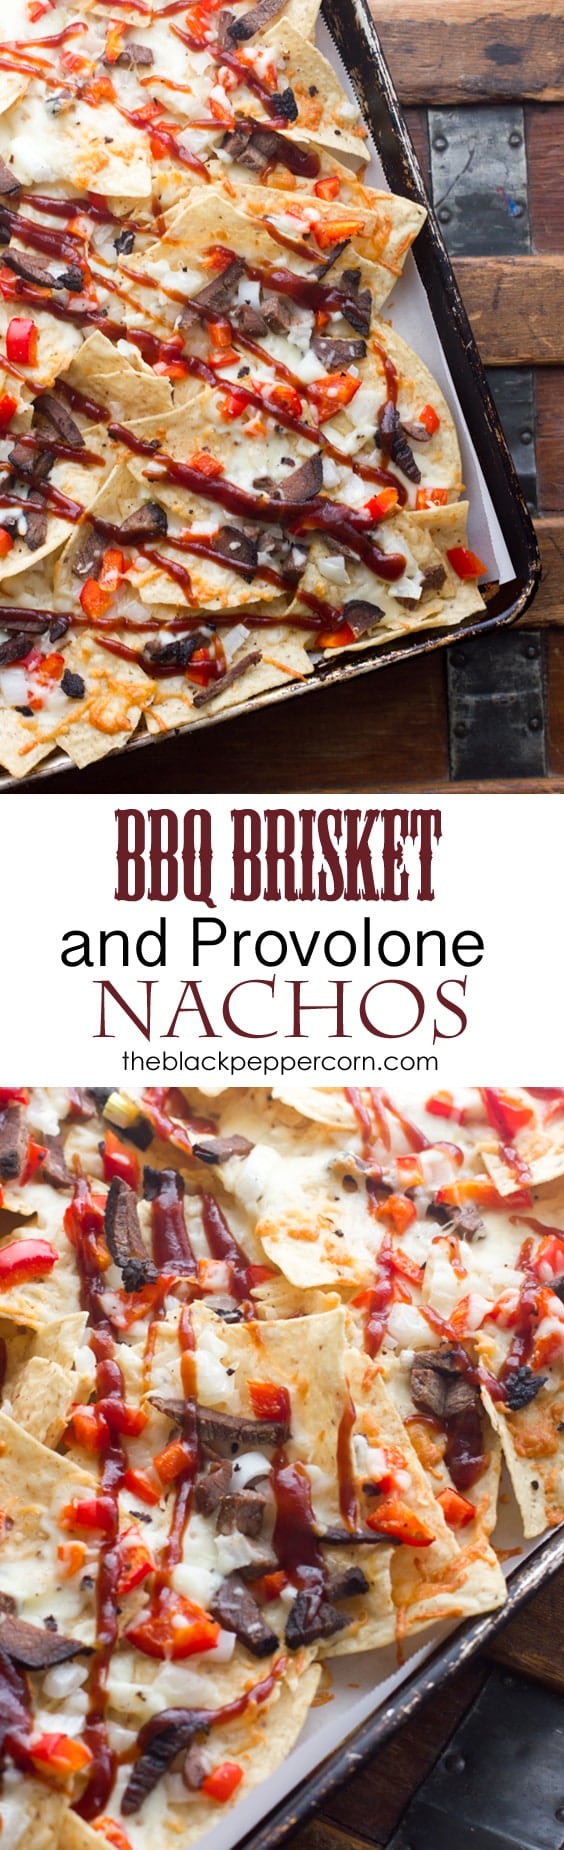 BBQ Brisket and Provolone Nachos_edited-1